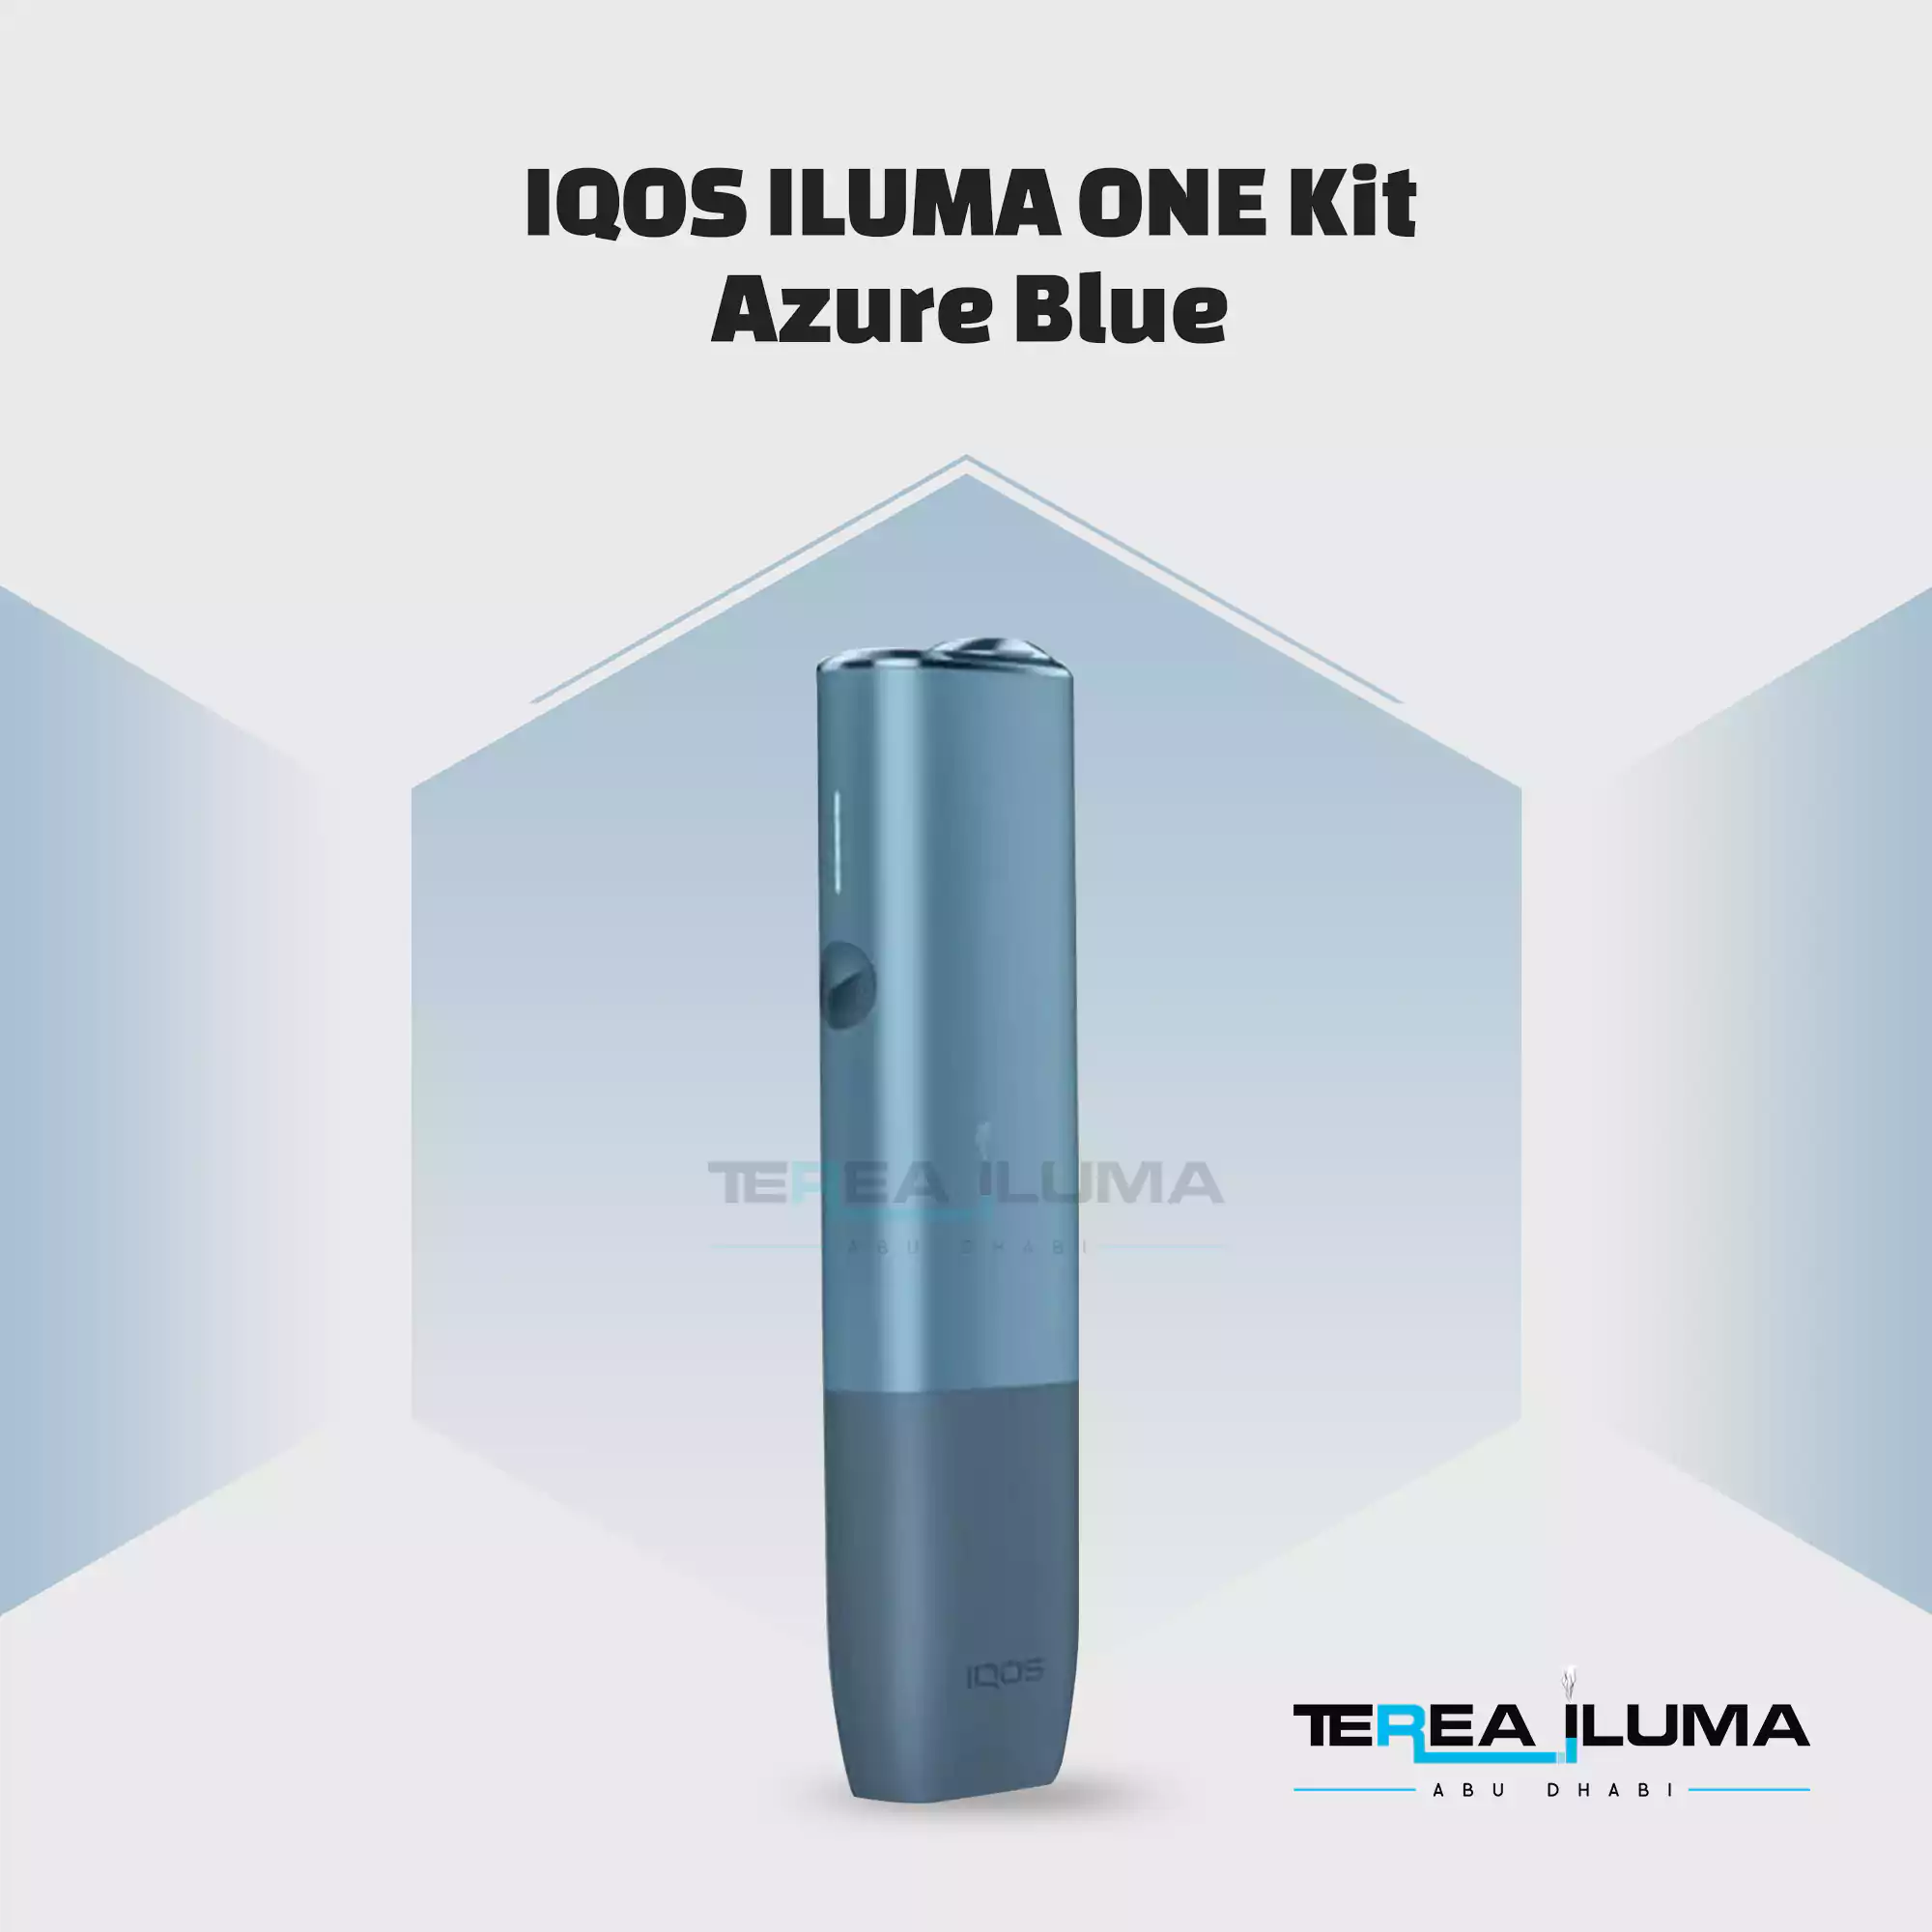 IQOS ILUMA ONE Kit Azure Blue günstig kaufen